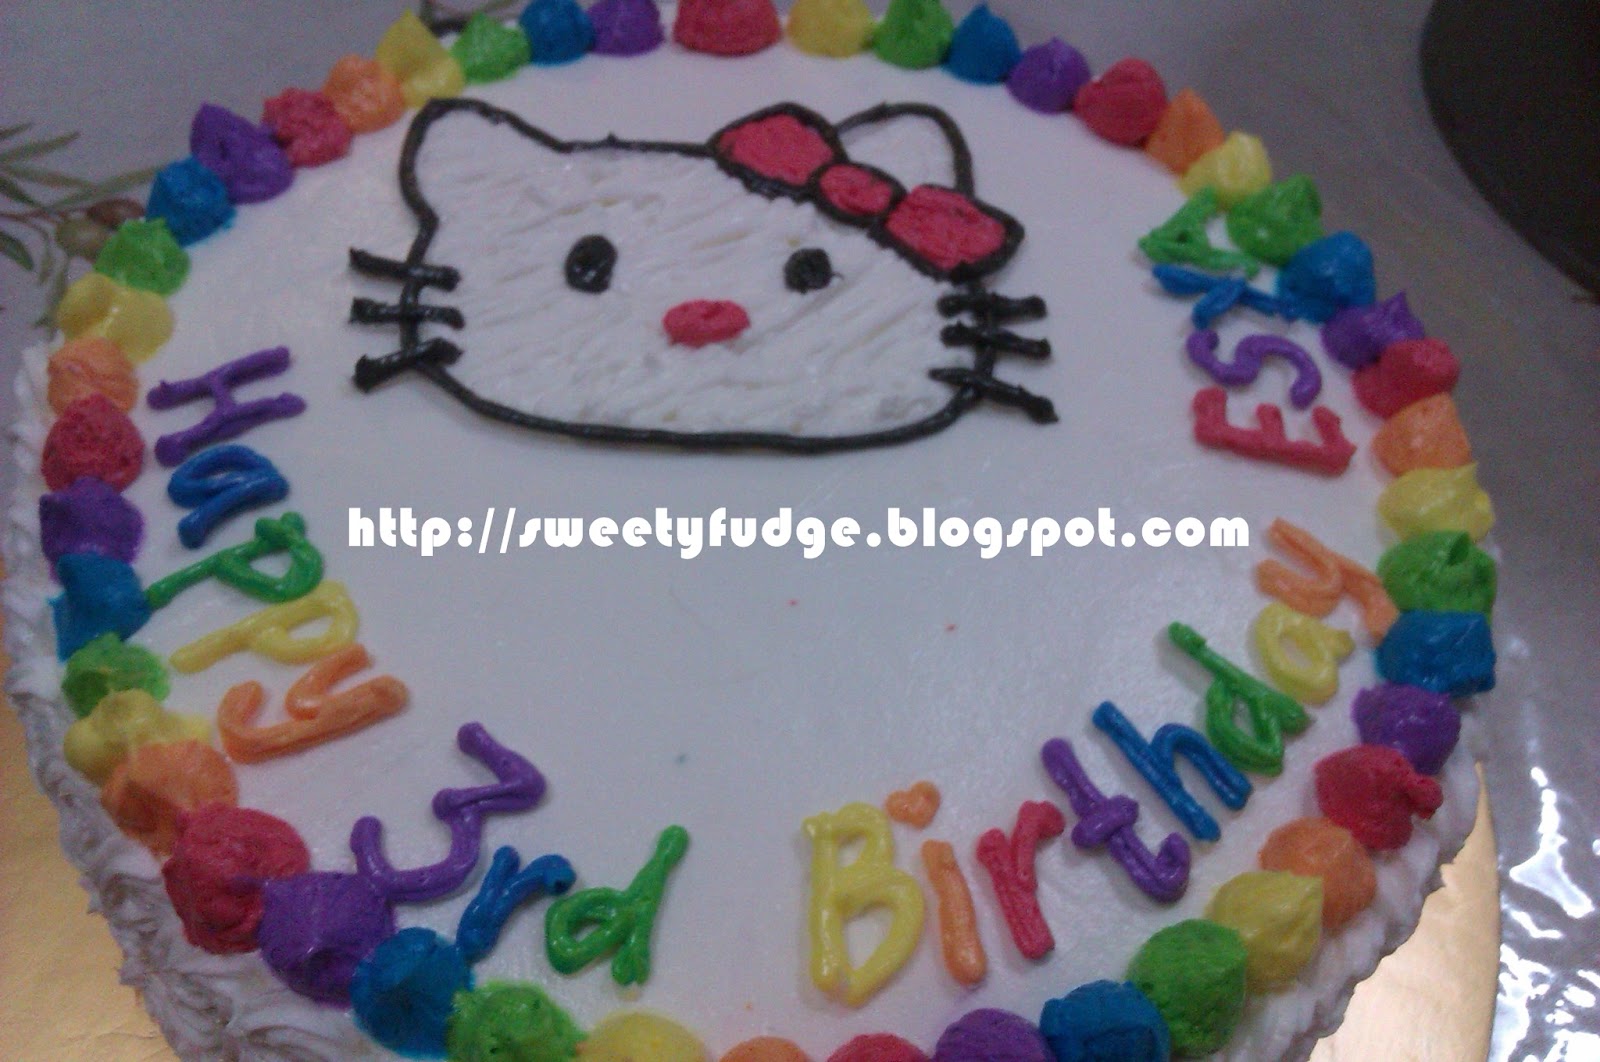 Sweetyfudge Bakery (001925672-X): Rainbow Cake Hello Kitty 